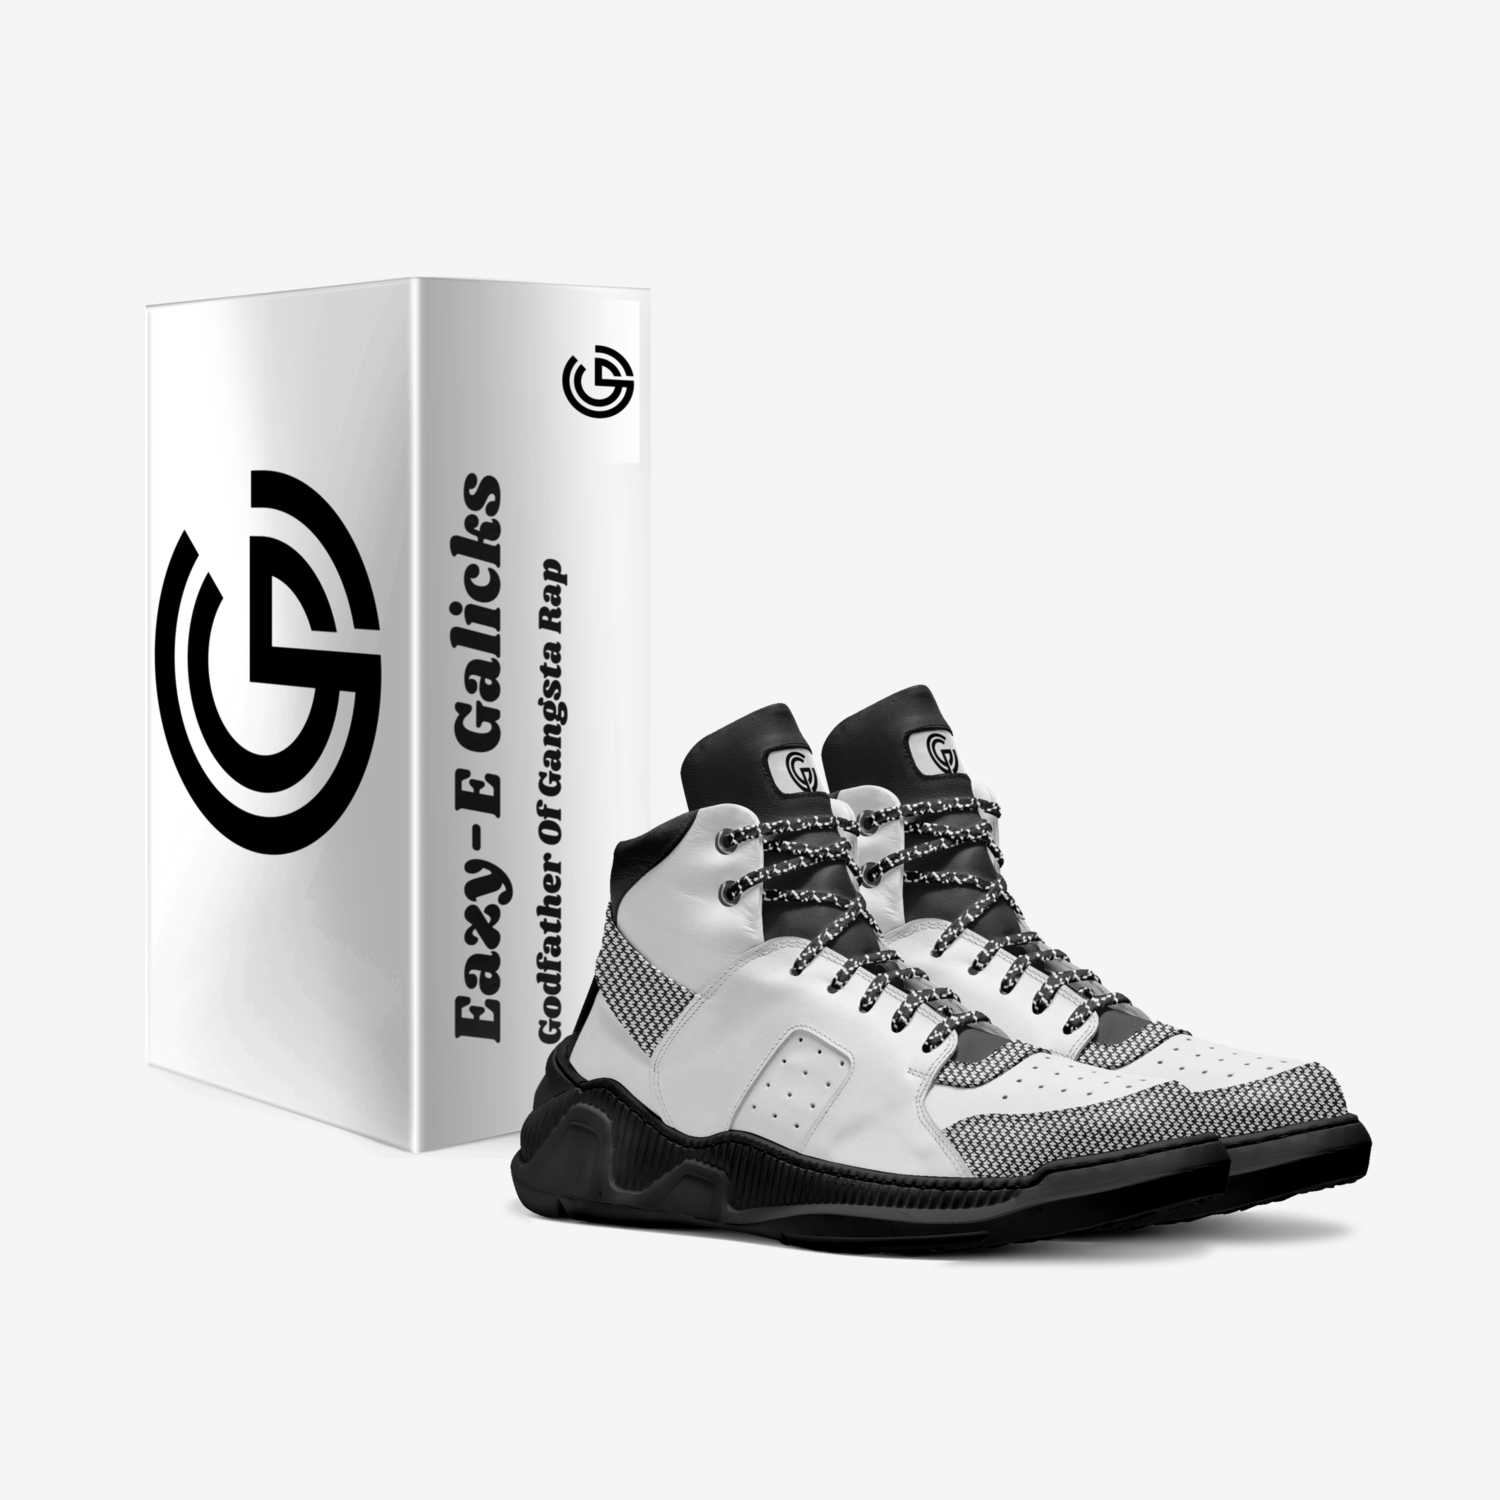 Eazy-e galicks custom made in Italy shoes by Jesse Davis | Box view